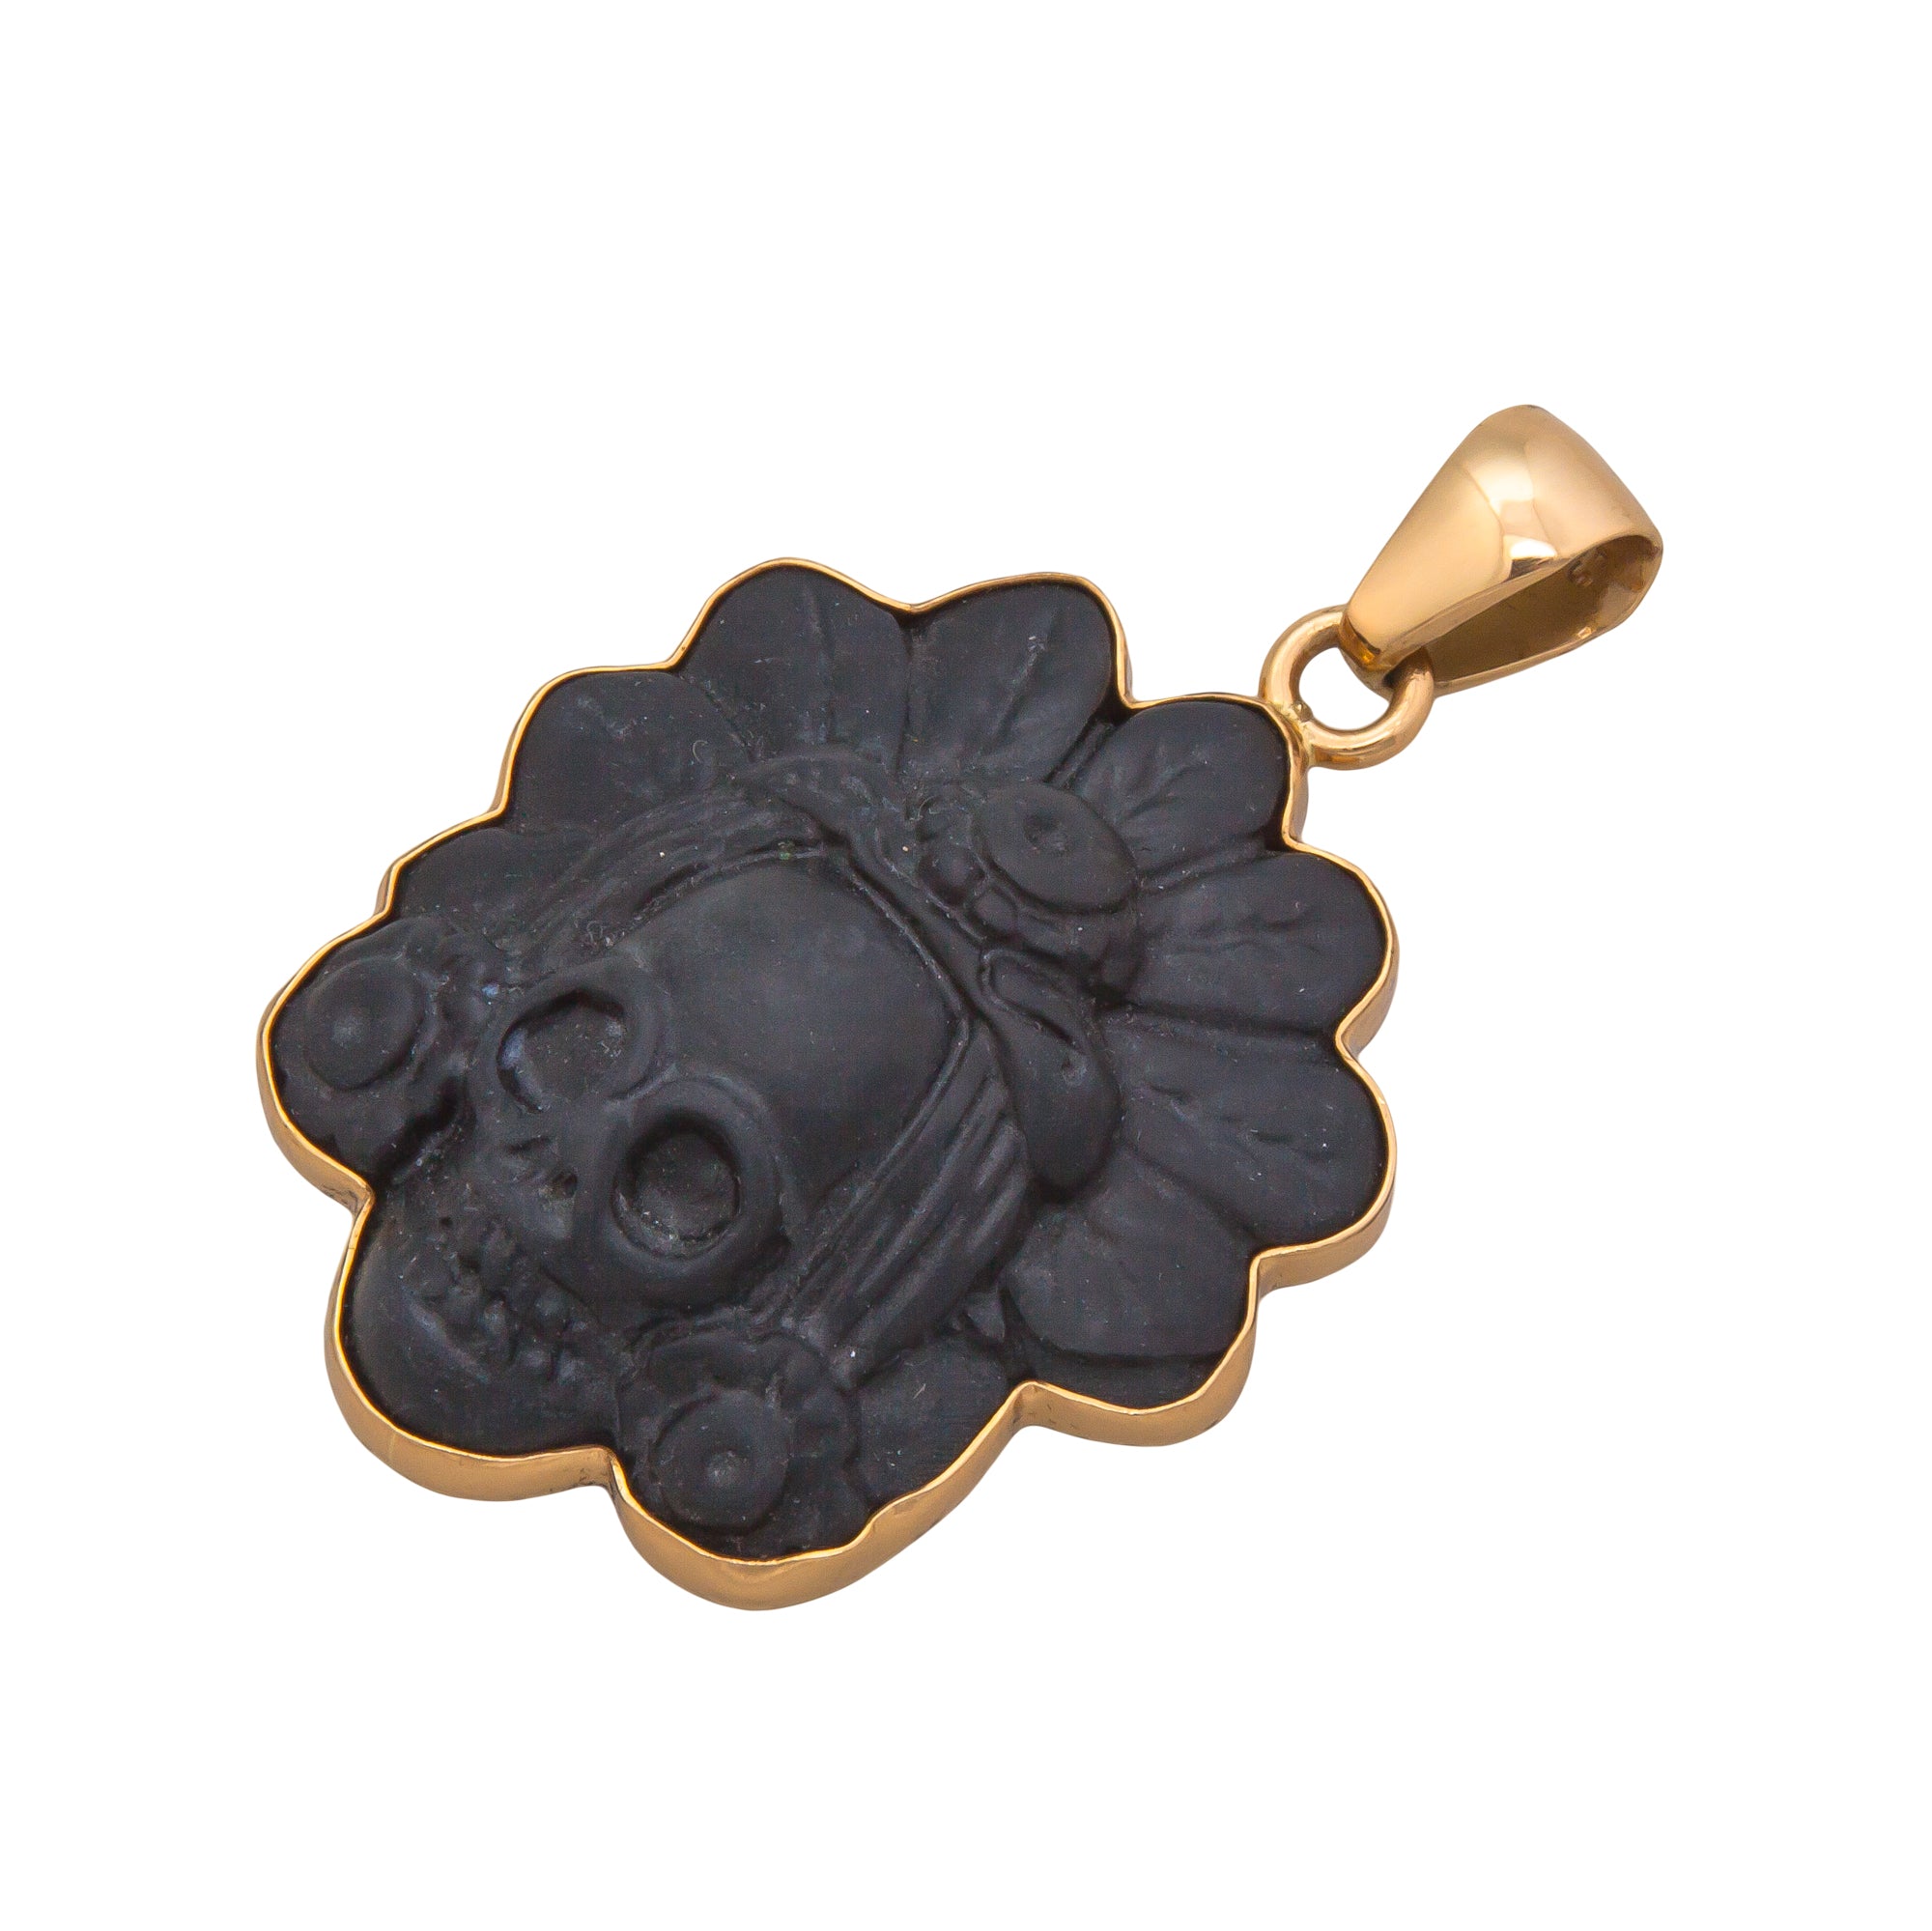 Alchemia Obsidian Skull Pendant | Charles Albert Jewelry